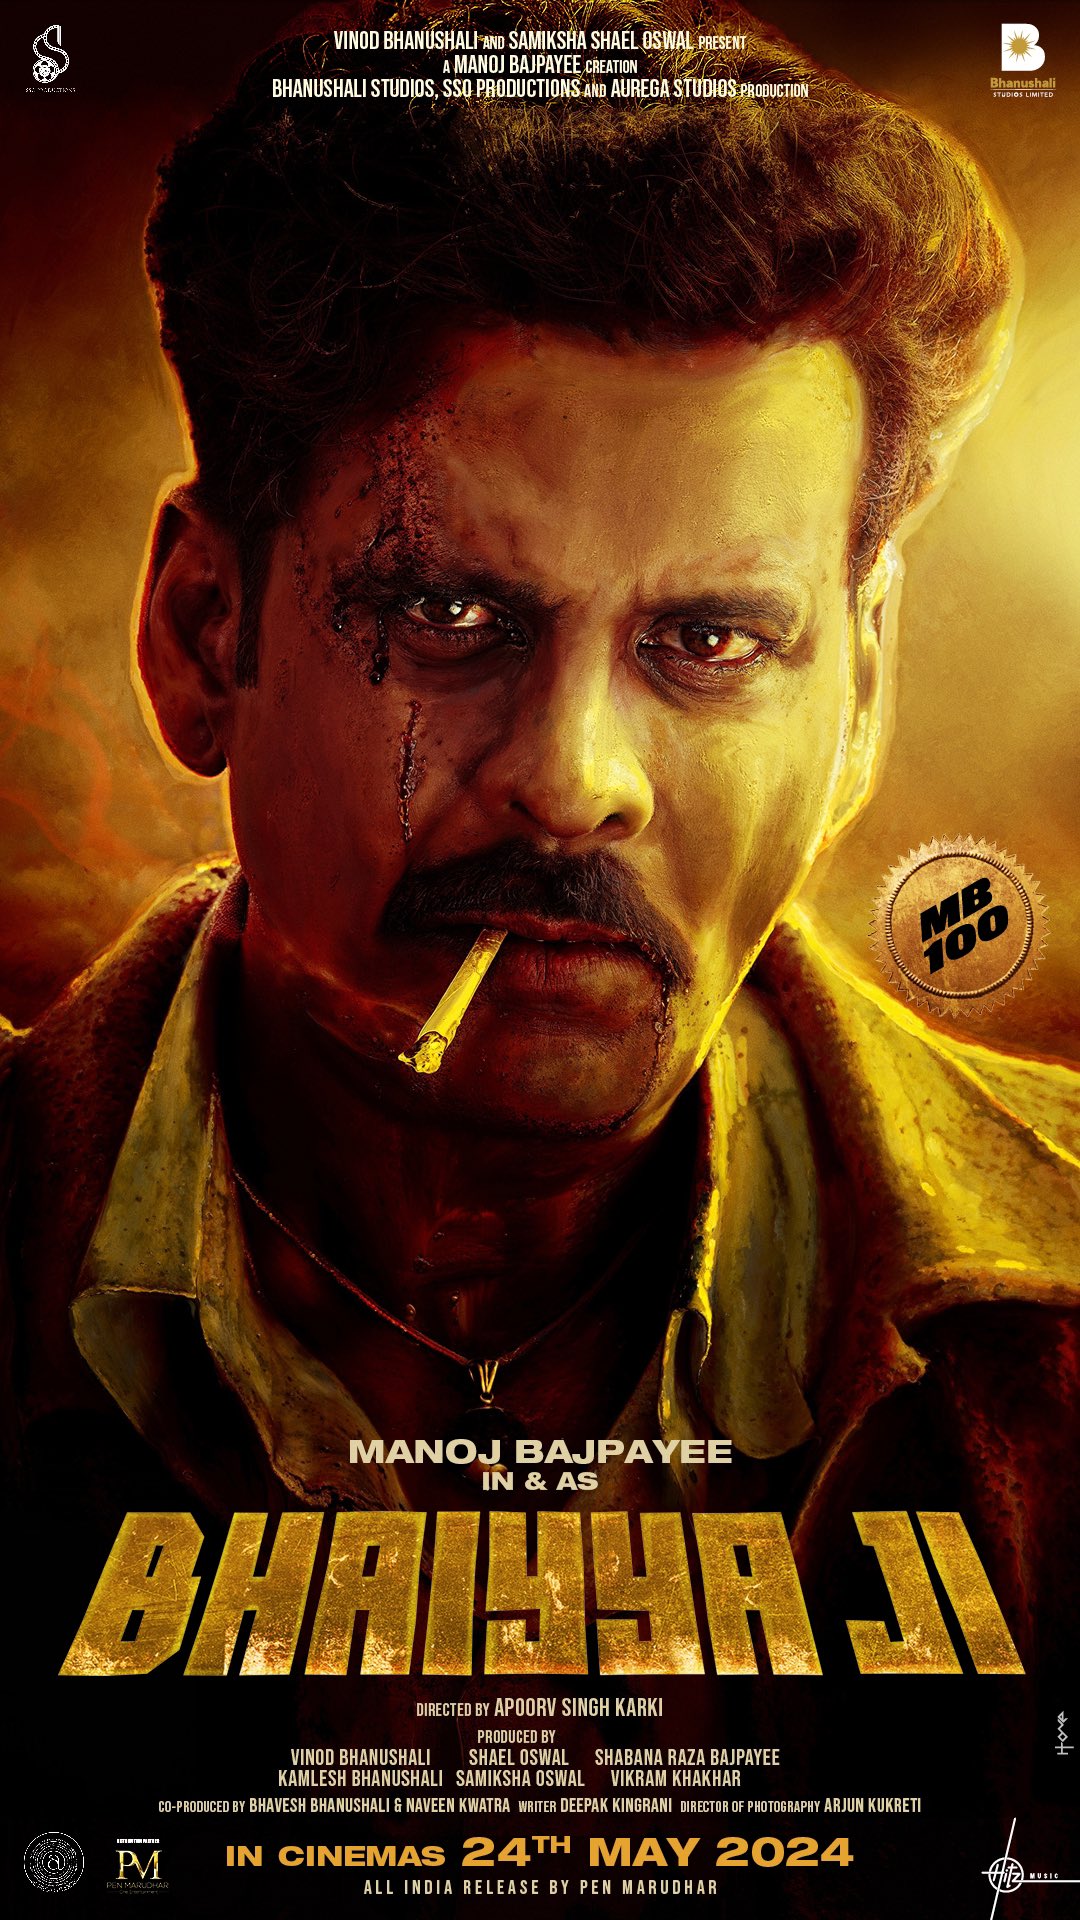 bhaiyya ji movie poster